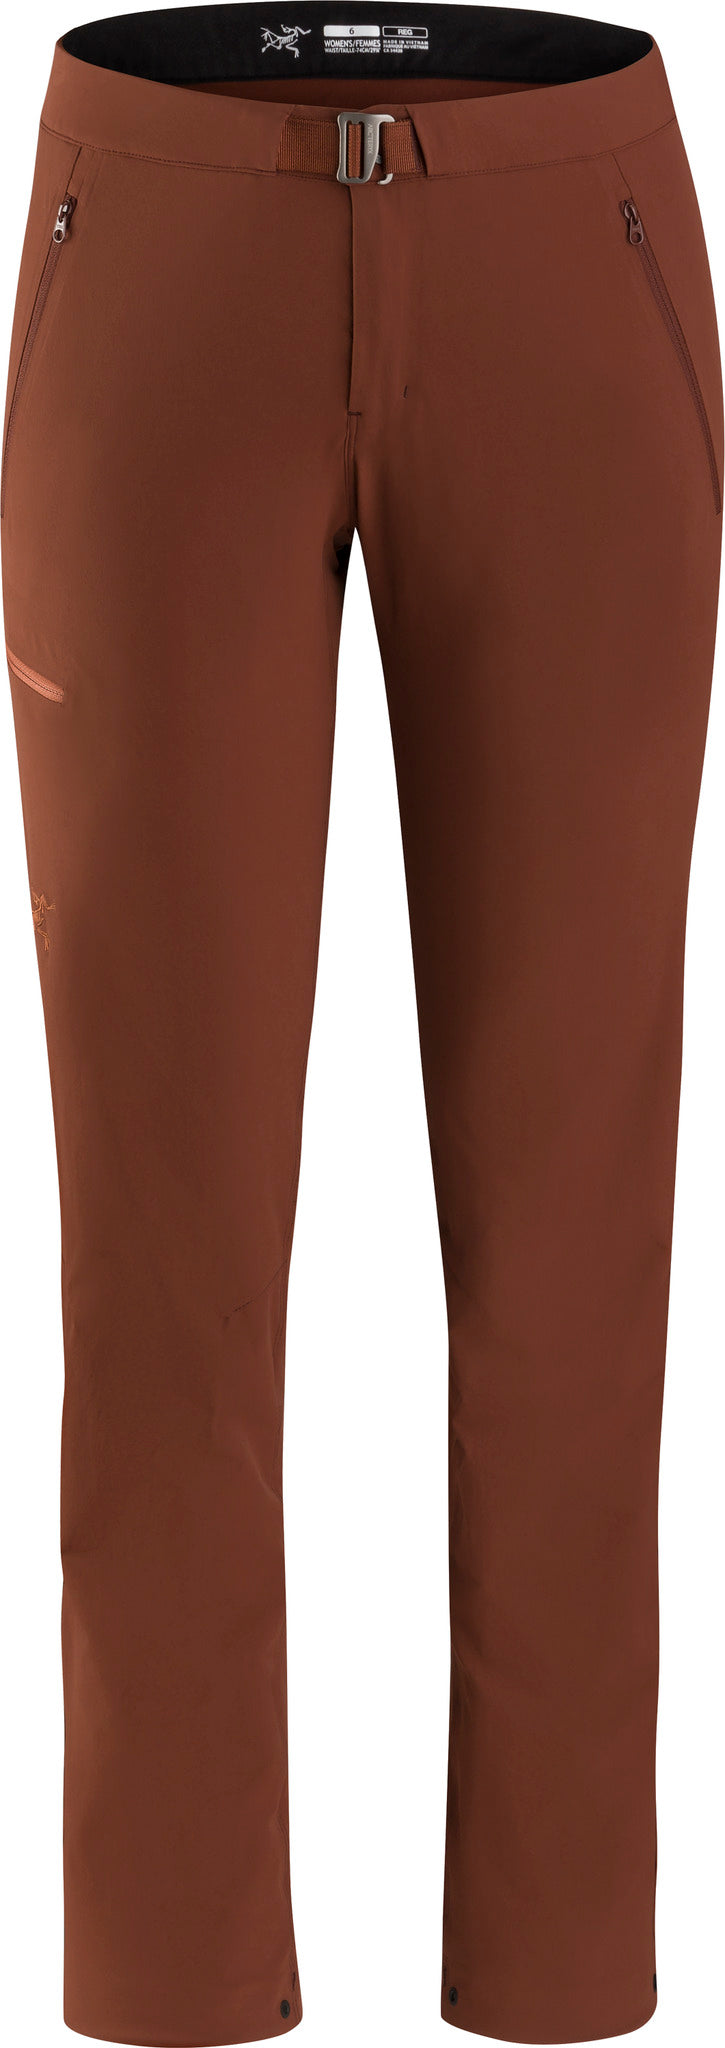 Womens New Arcteryx Gamma LT Pants Size Medium Color Smoked Lilac 2016 Model